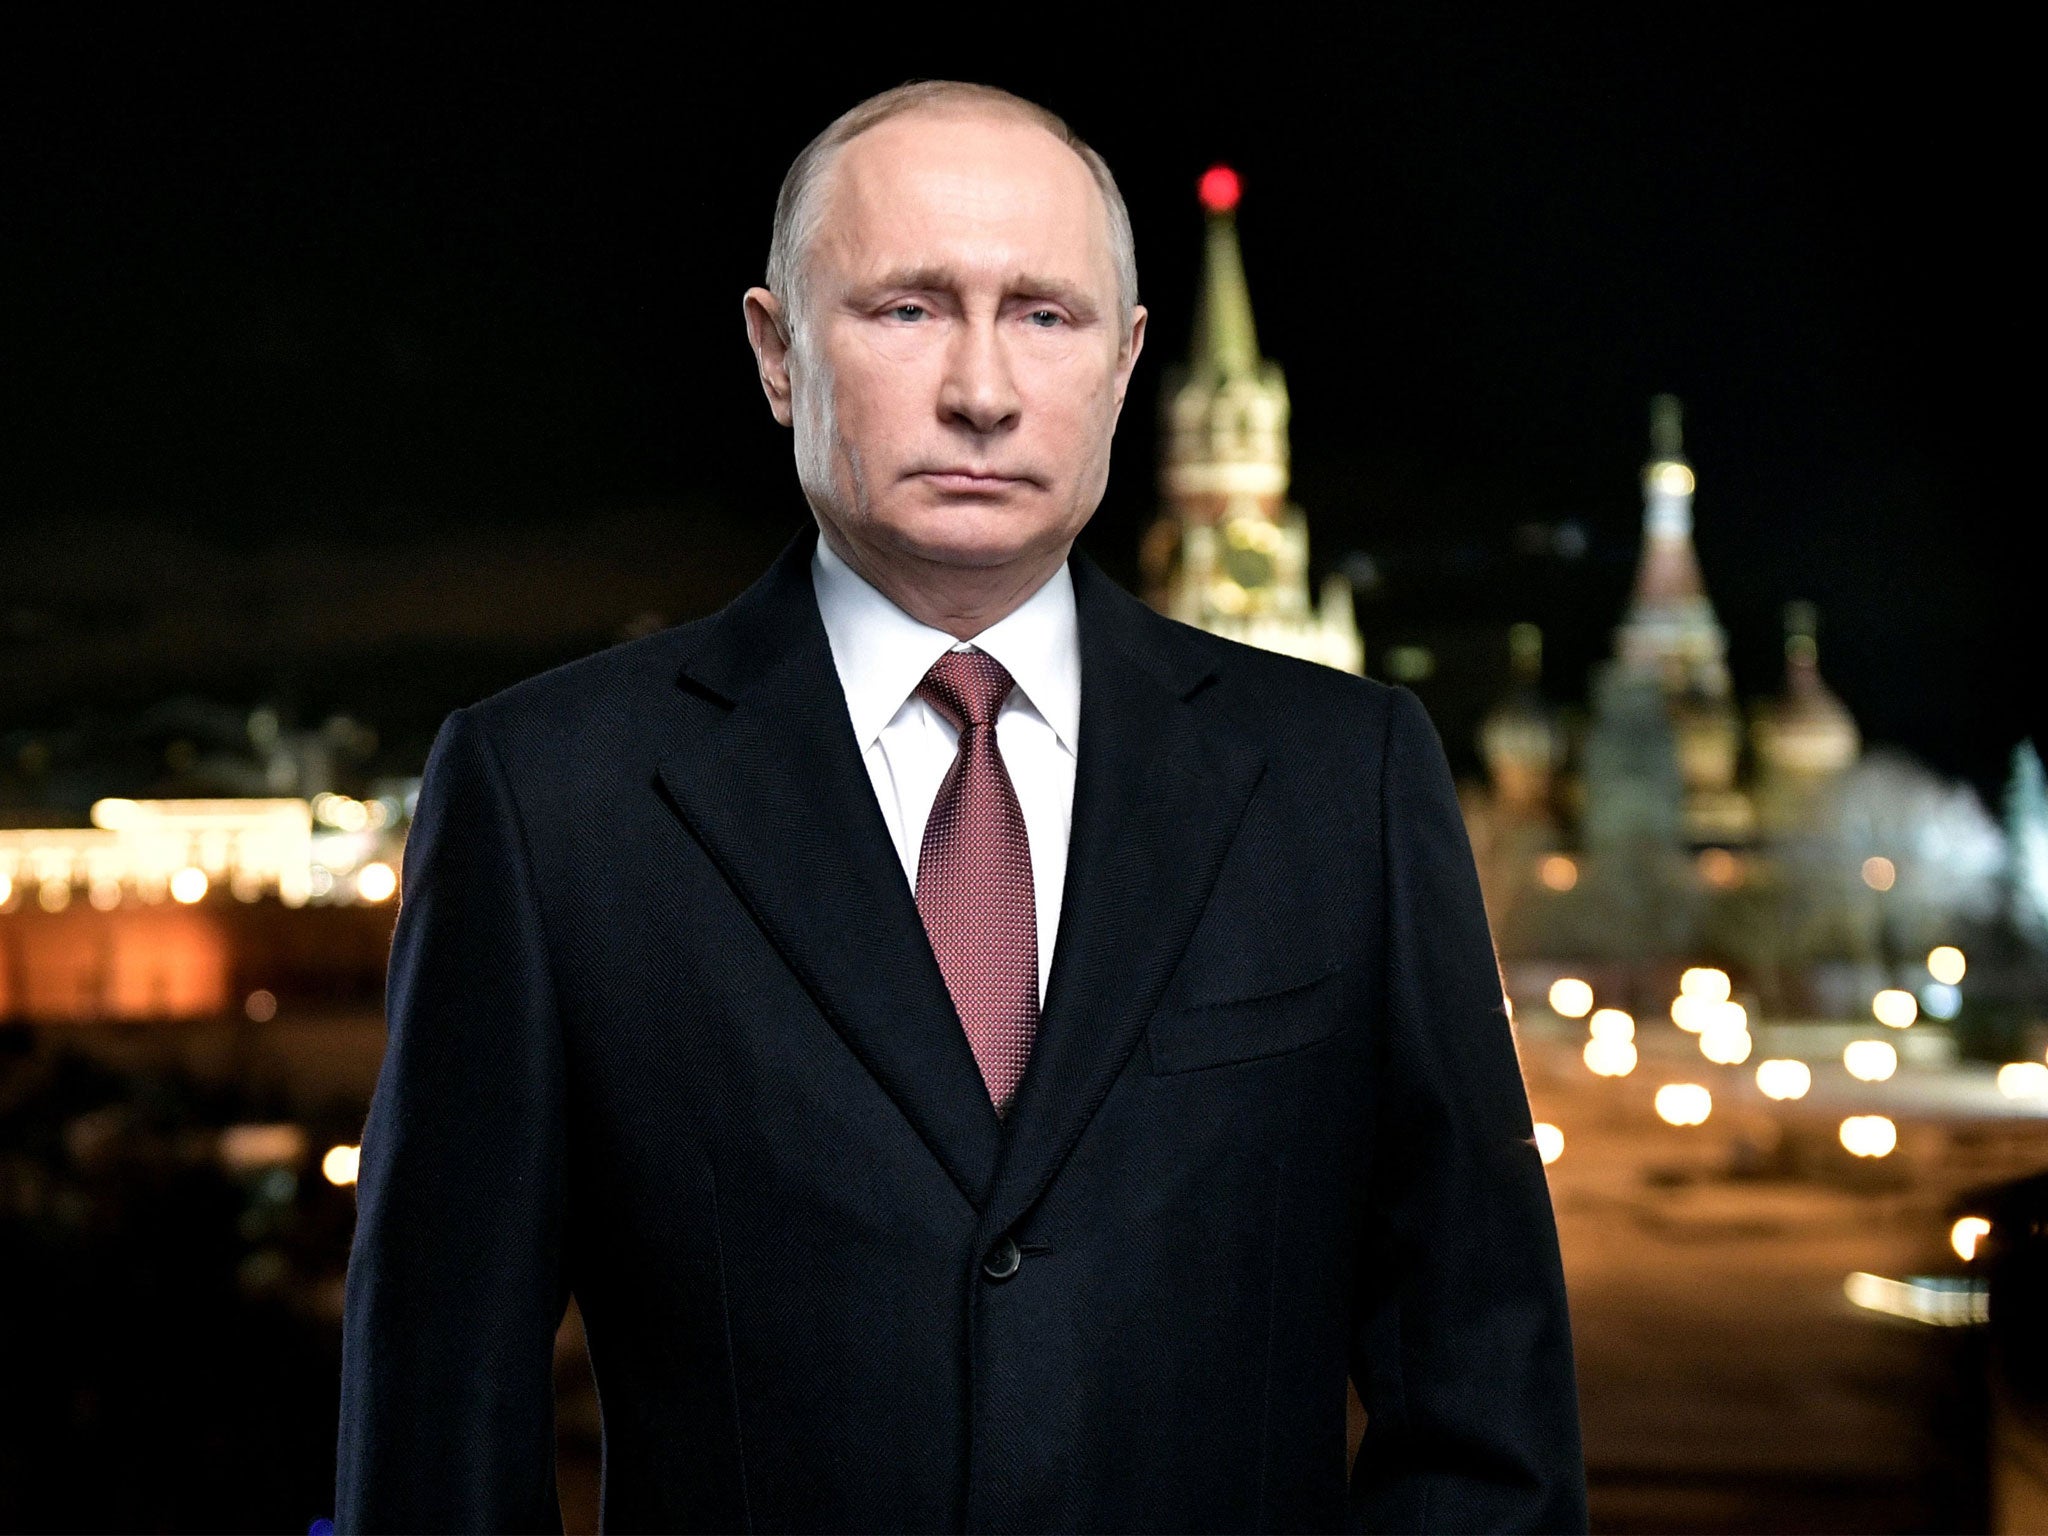 Putin has created a new model of 'tough' authoritarian leadership.